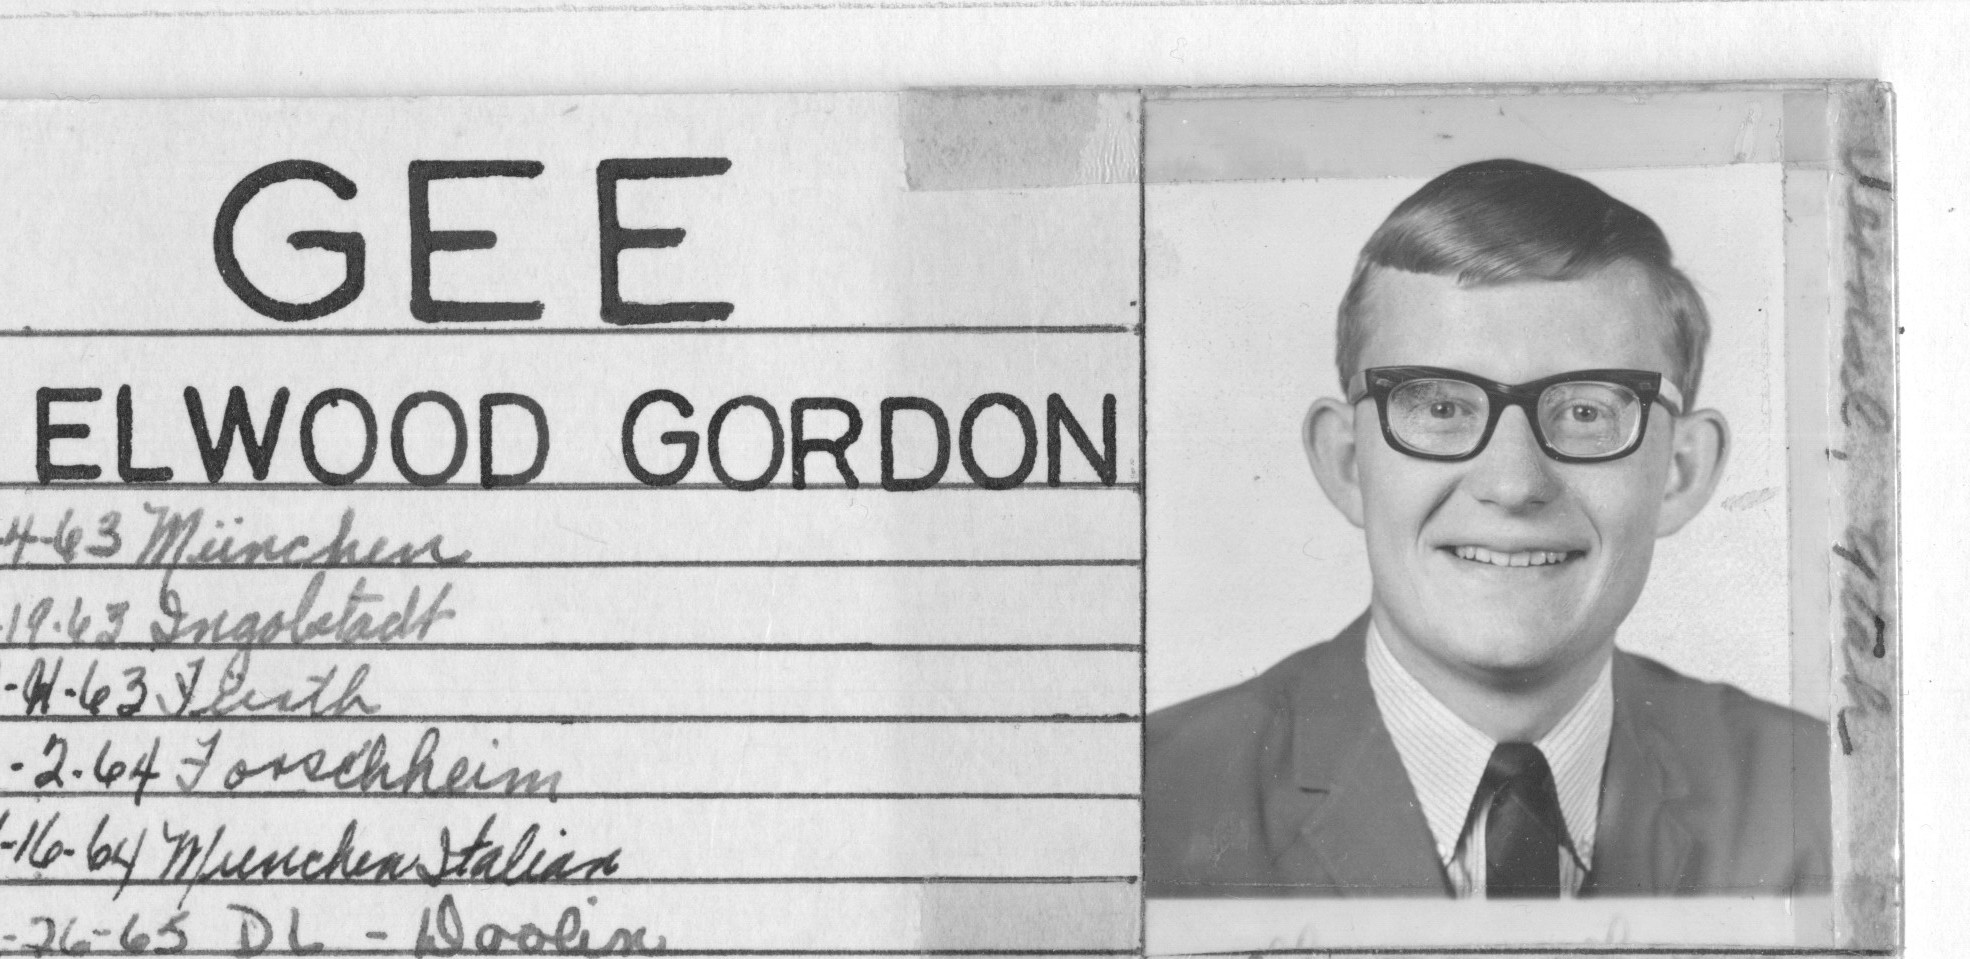 Gee, Elwood Gordon